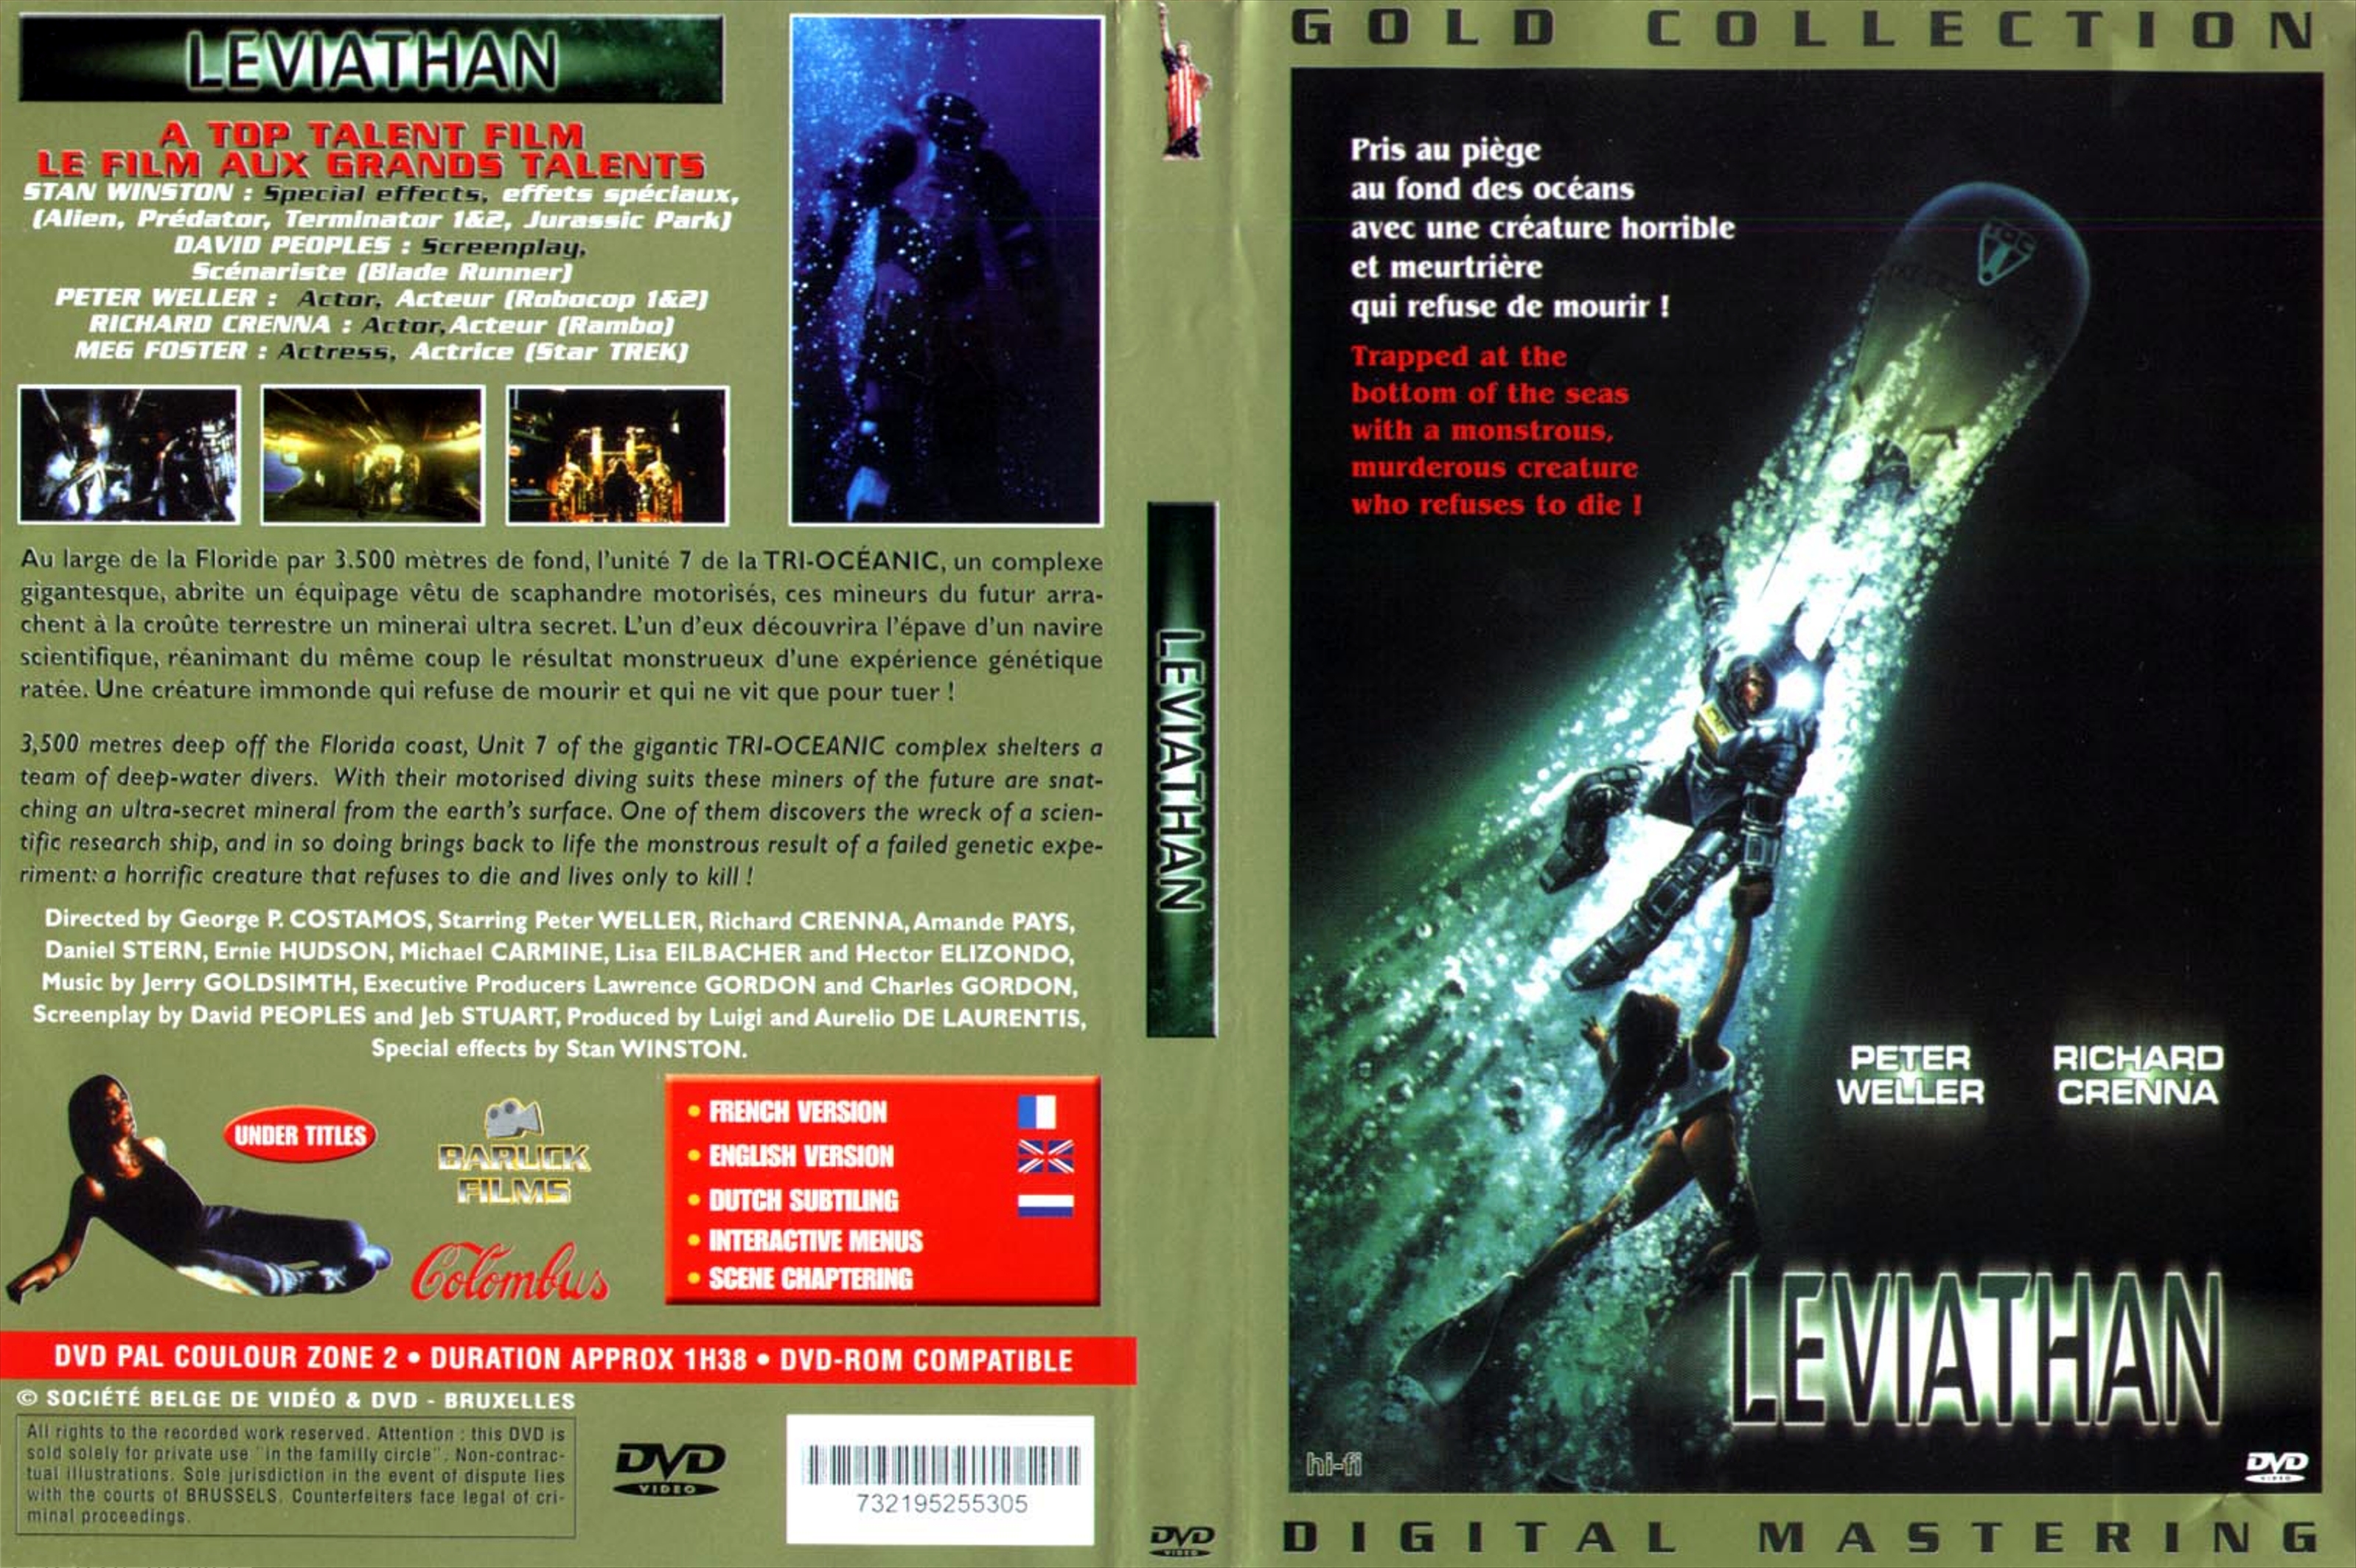 Jaquette DVD Leviathan v3